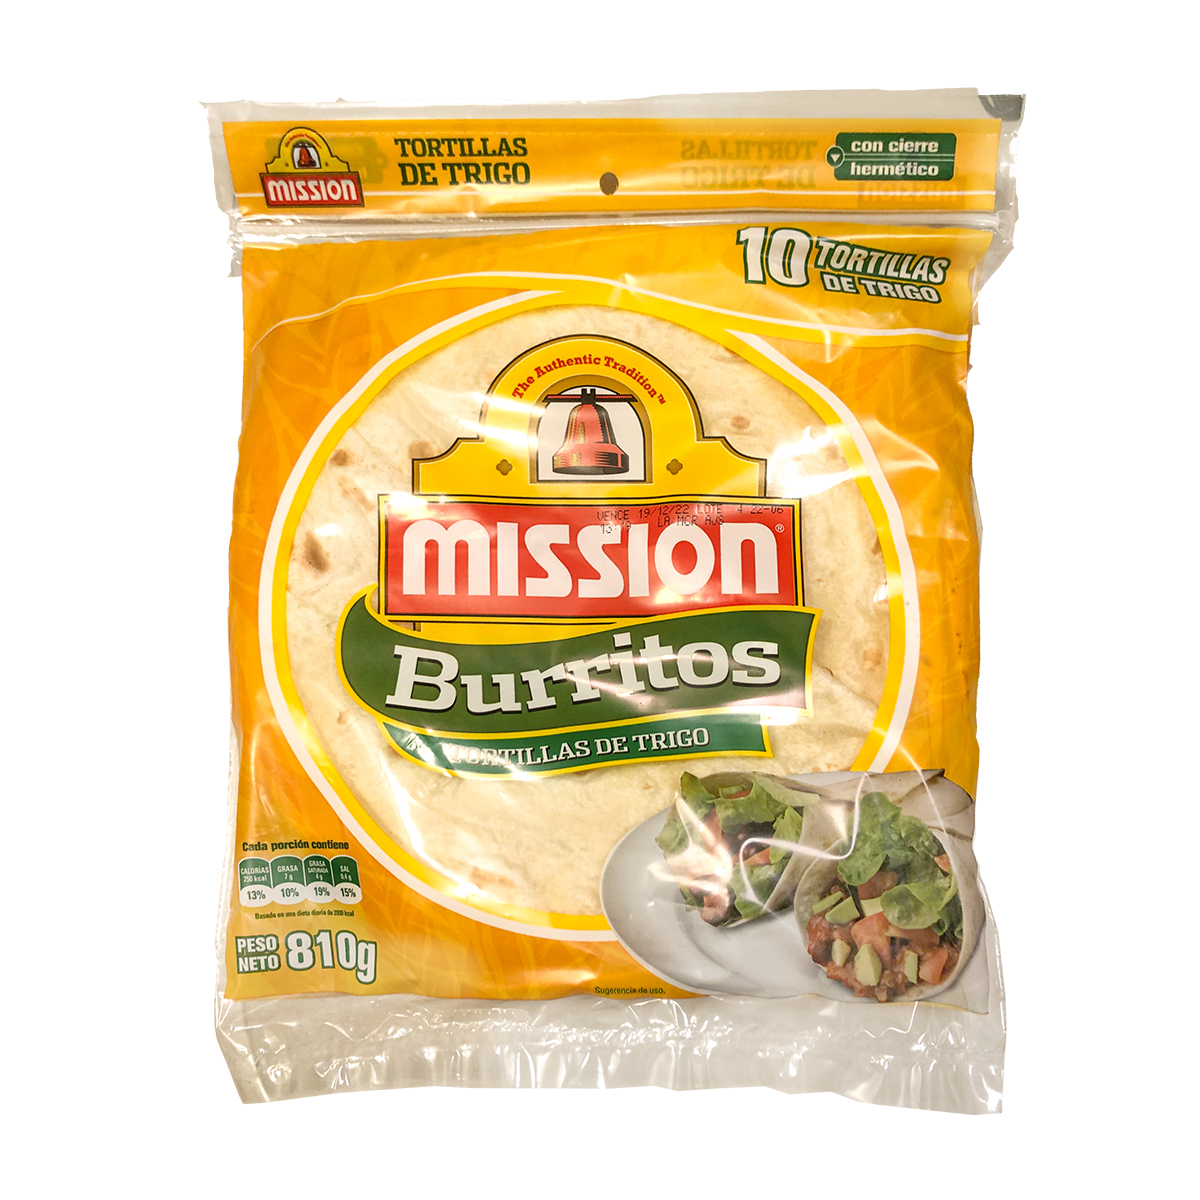 Tortilla de trigo 10" Mission